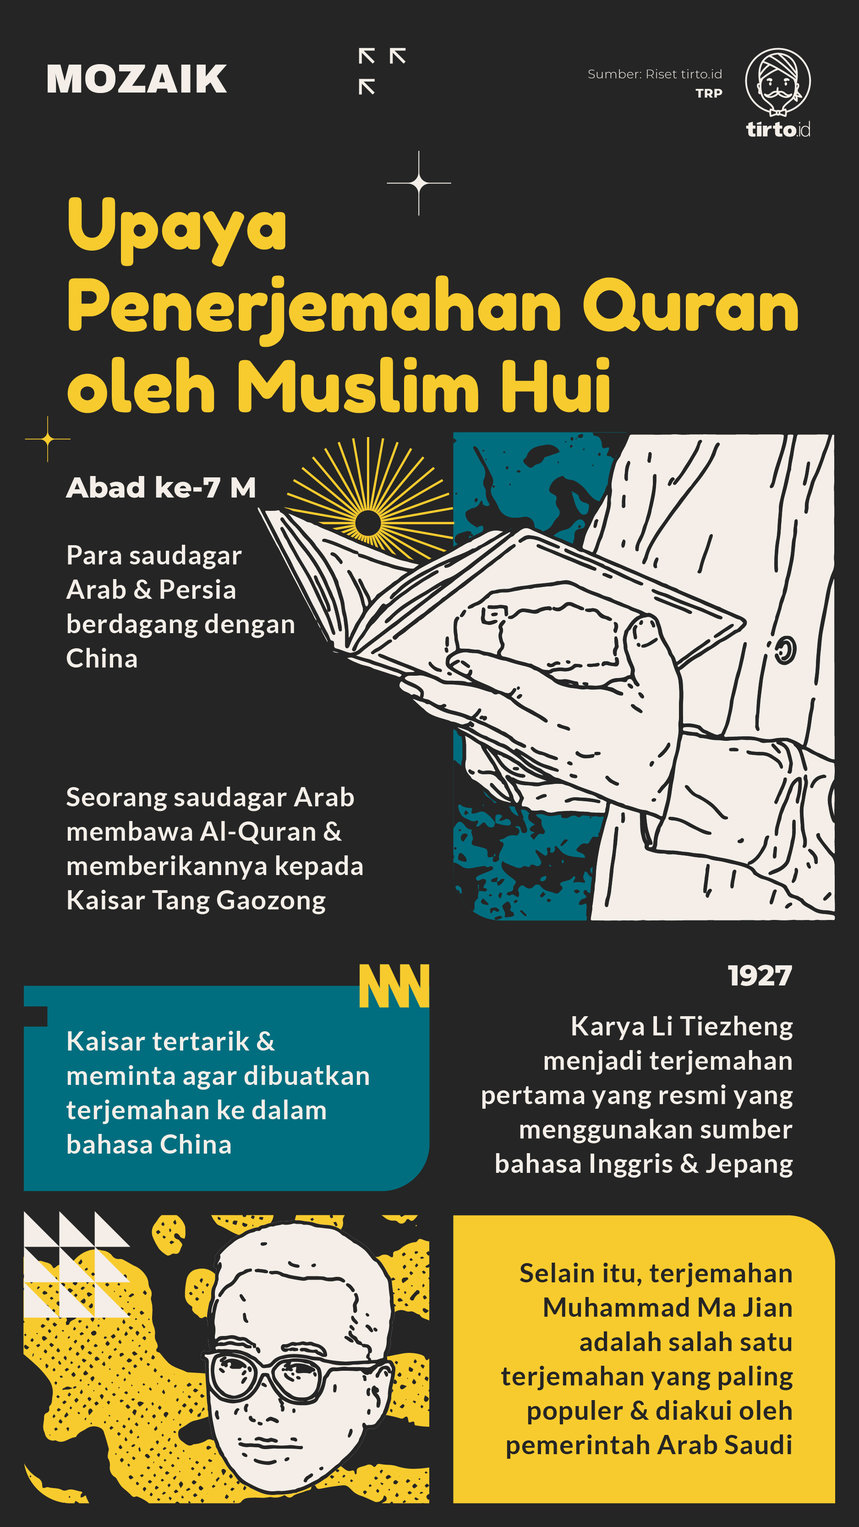 Infografik Mozaik Upaya Penerjemahan Quran oleh Muslim Hui